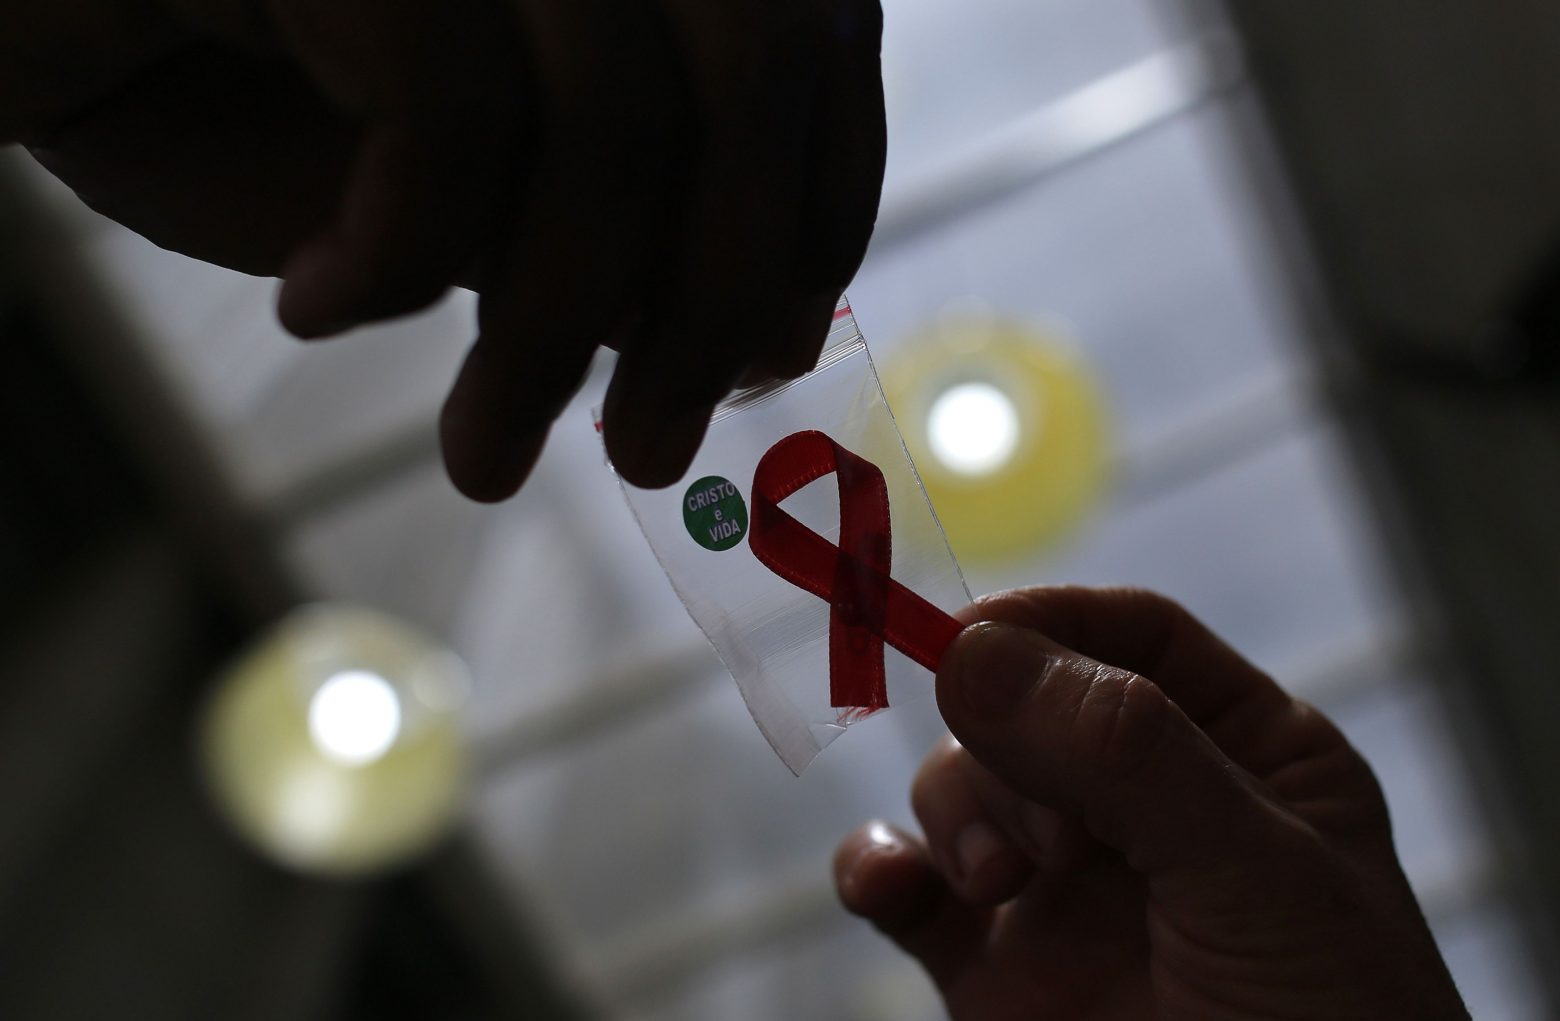 HIV – Ακόμα ένα εμβόλιο απέτυχε στις κλινικές δοκιμές